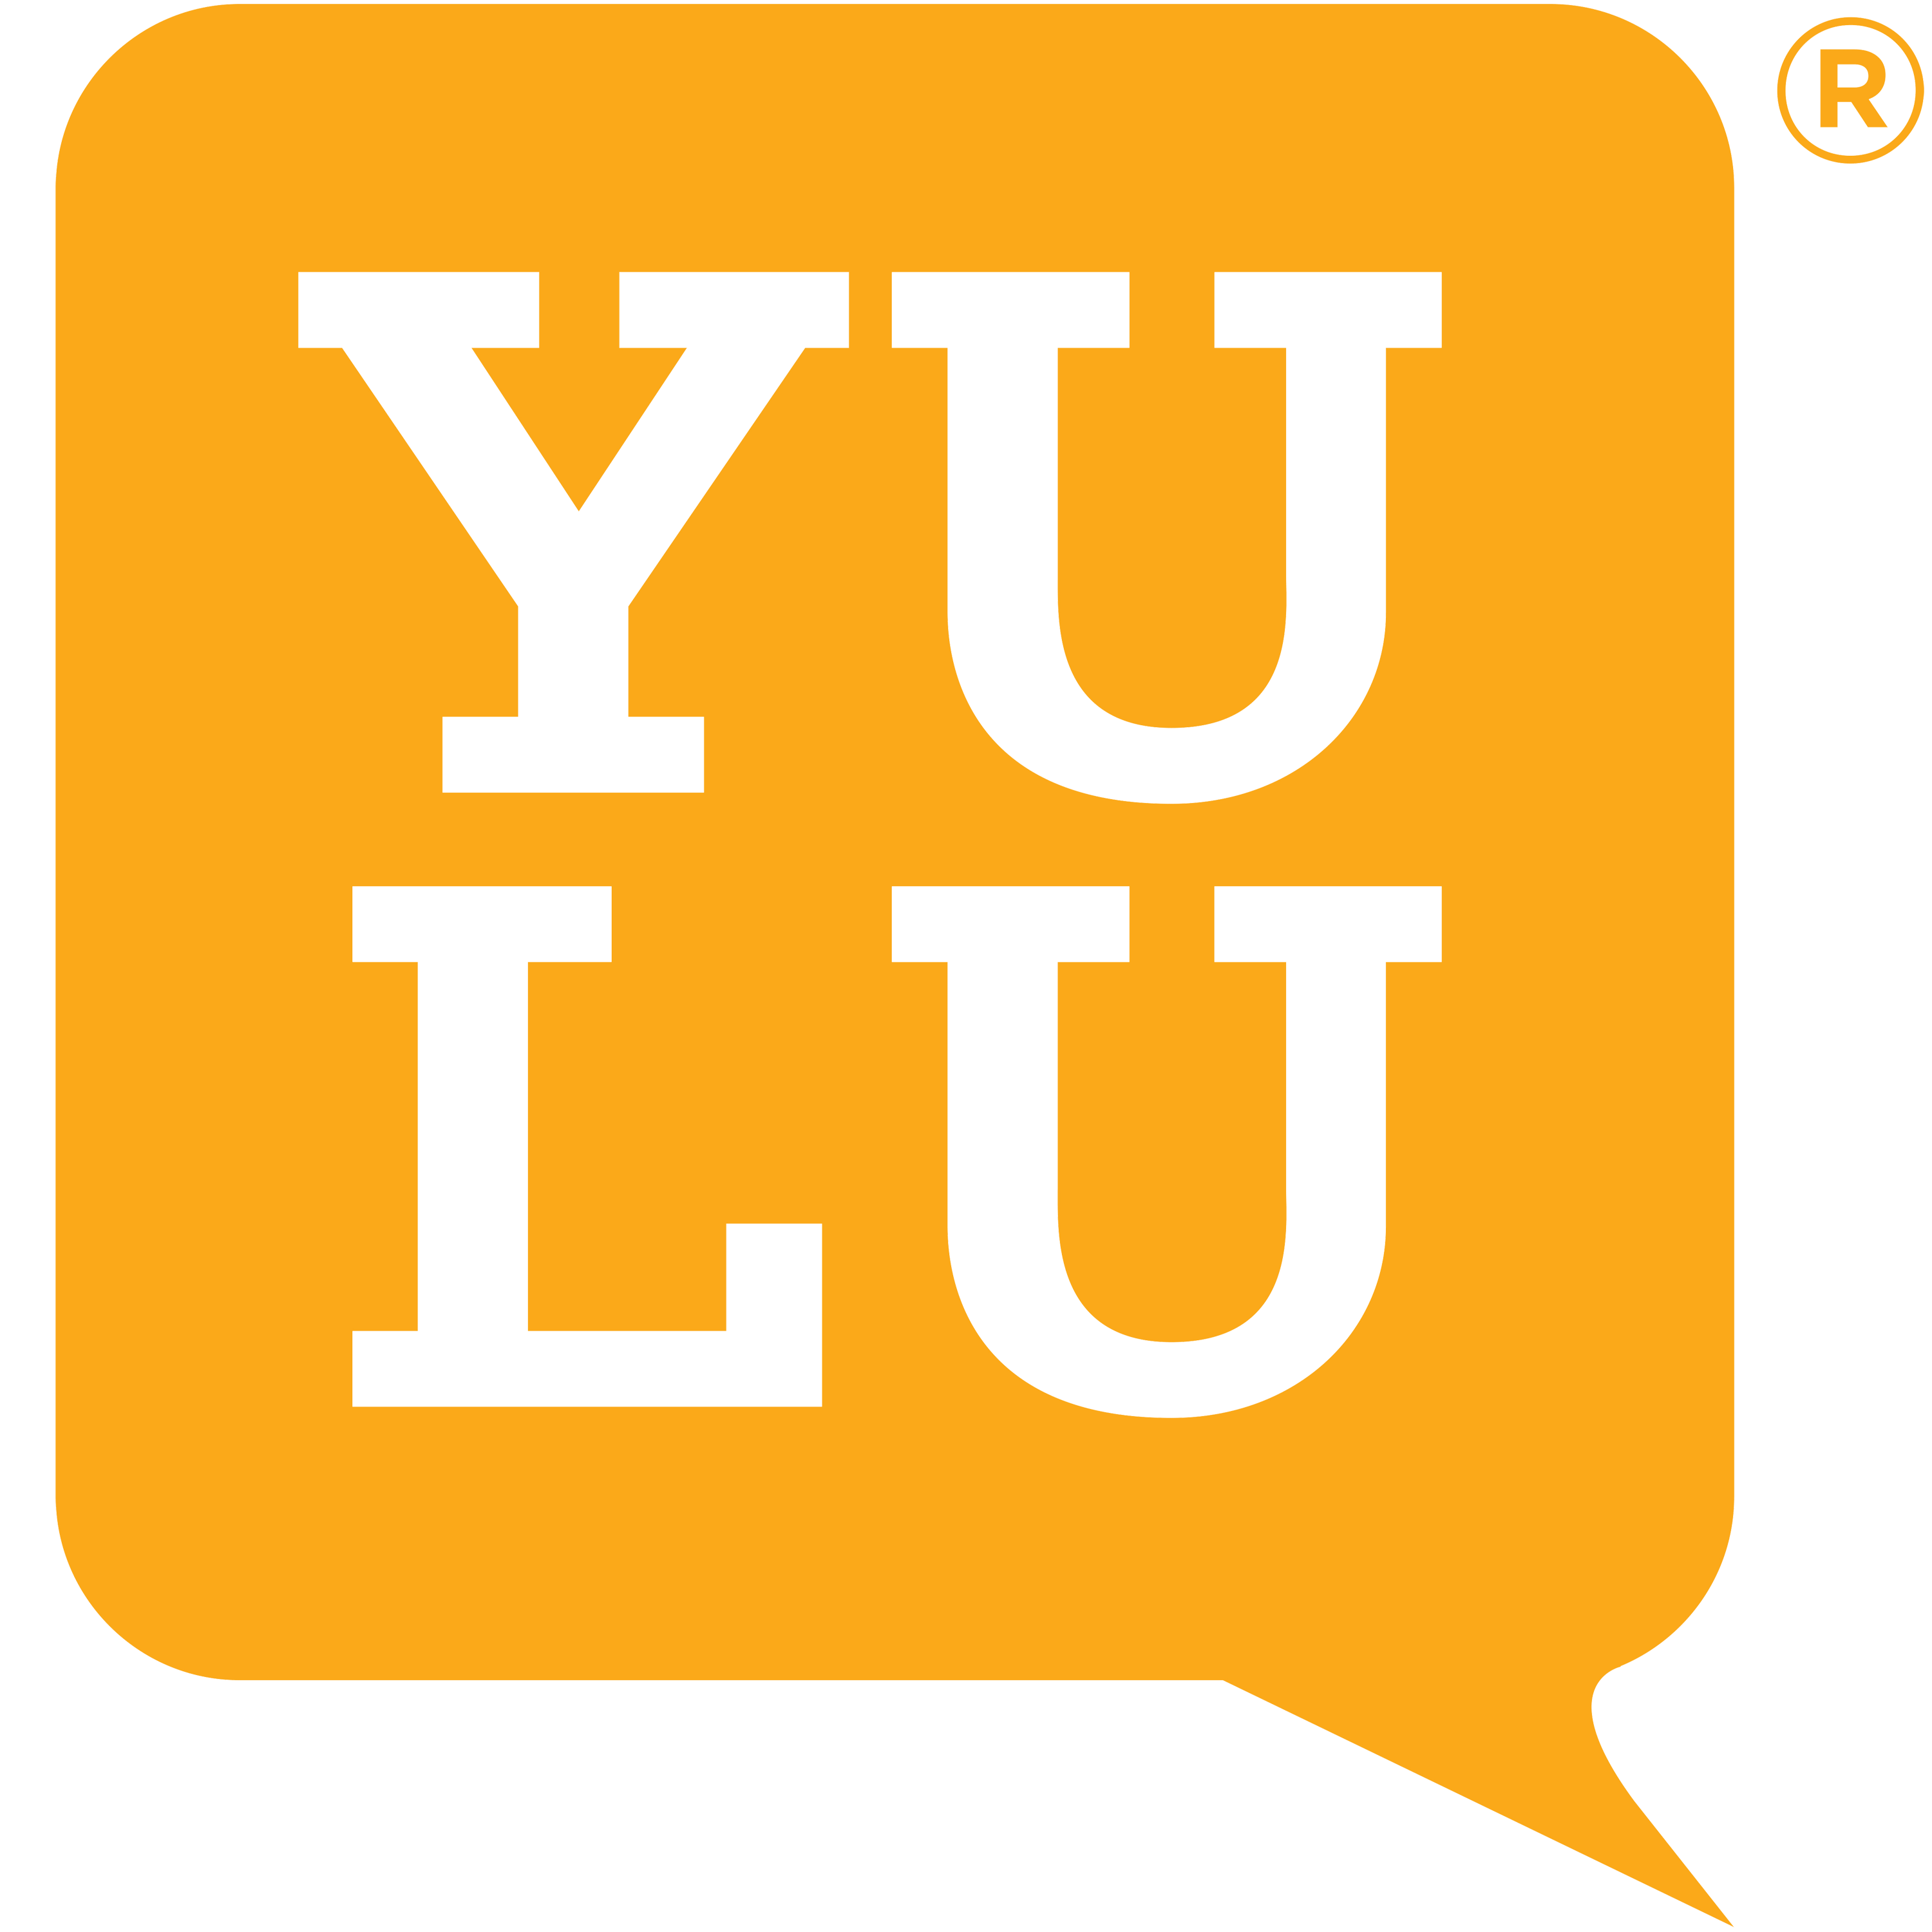 Yulu Public Relations Inc.- Logo